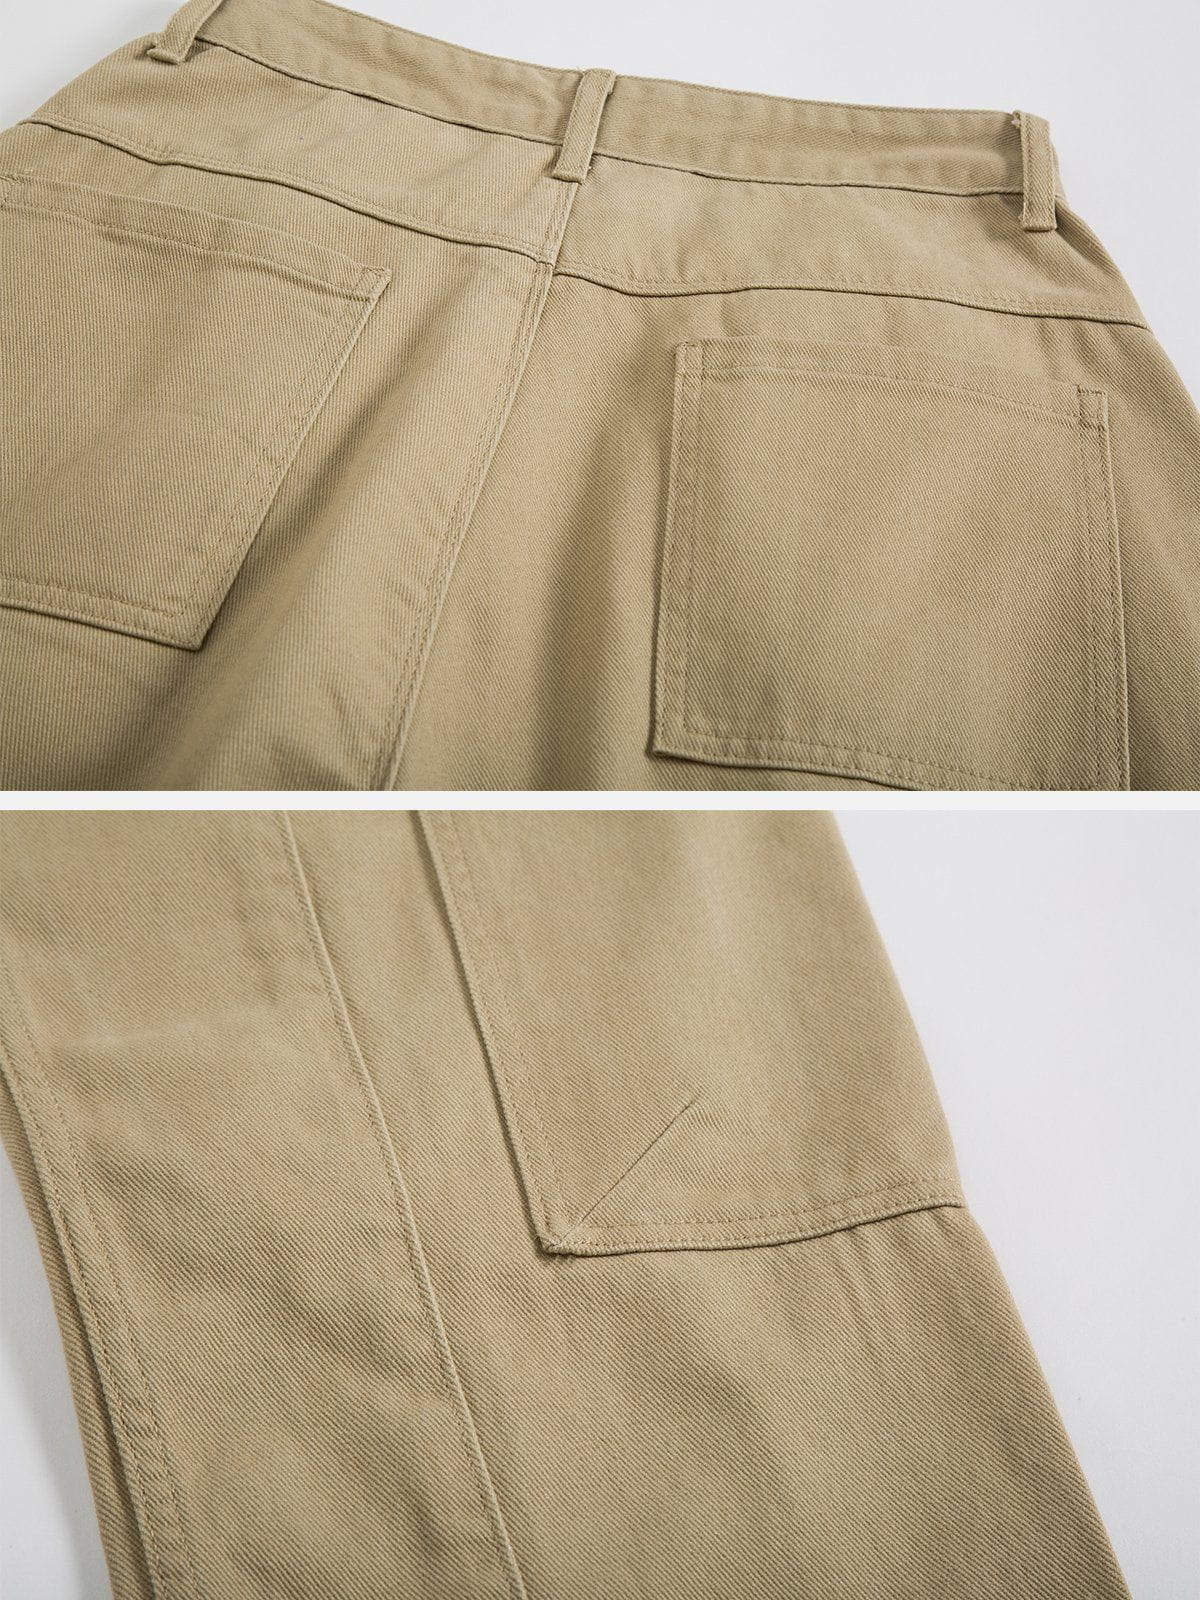 Majesda® - Vertical Pocket Cargo Pants outfit ideas streetwear fashion